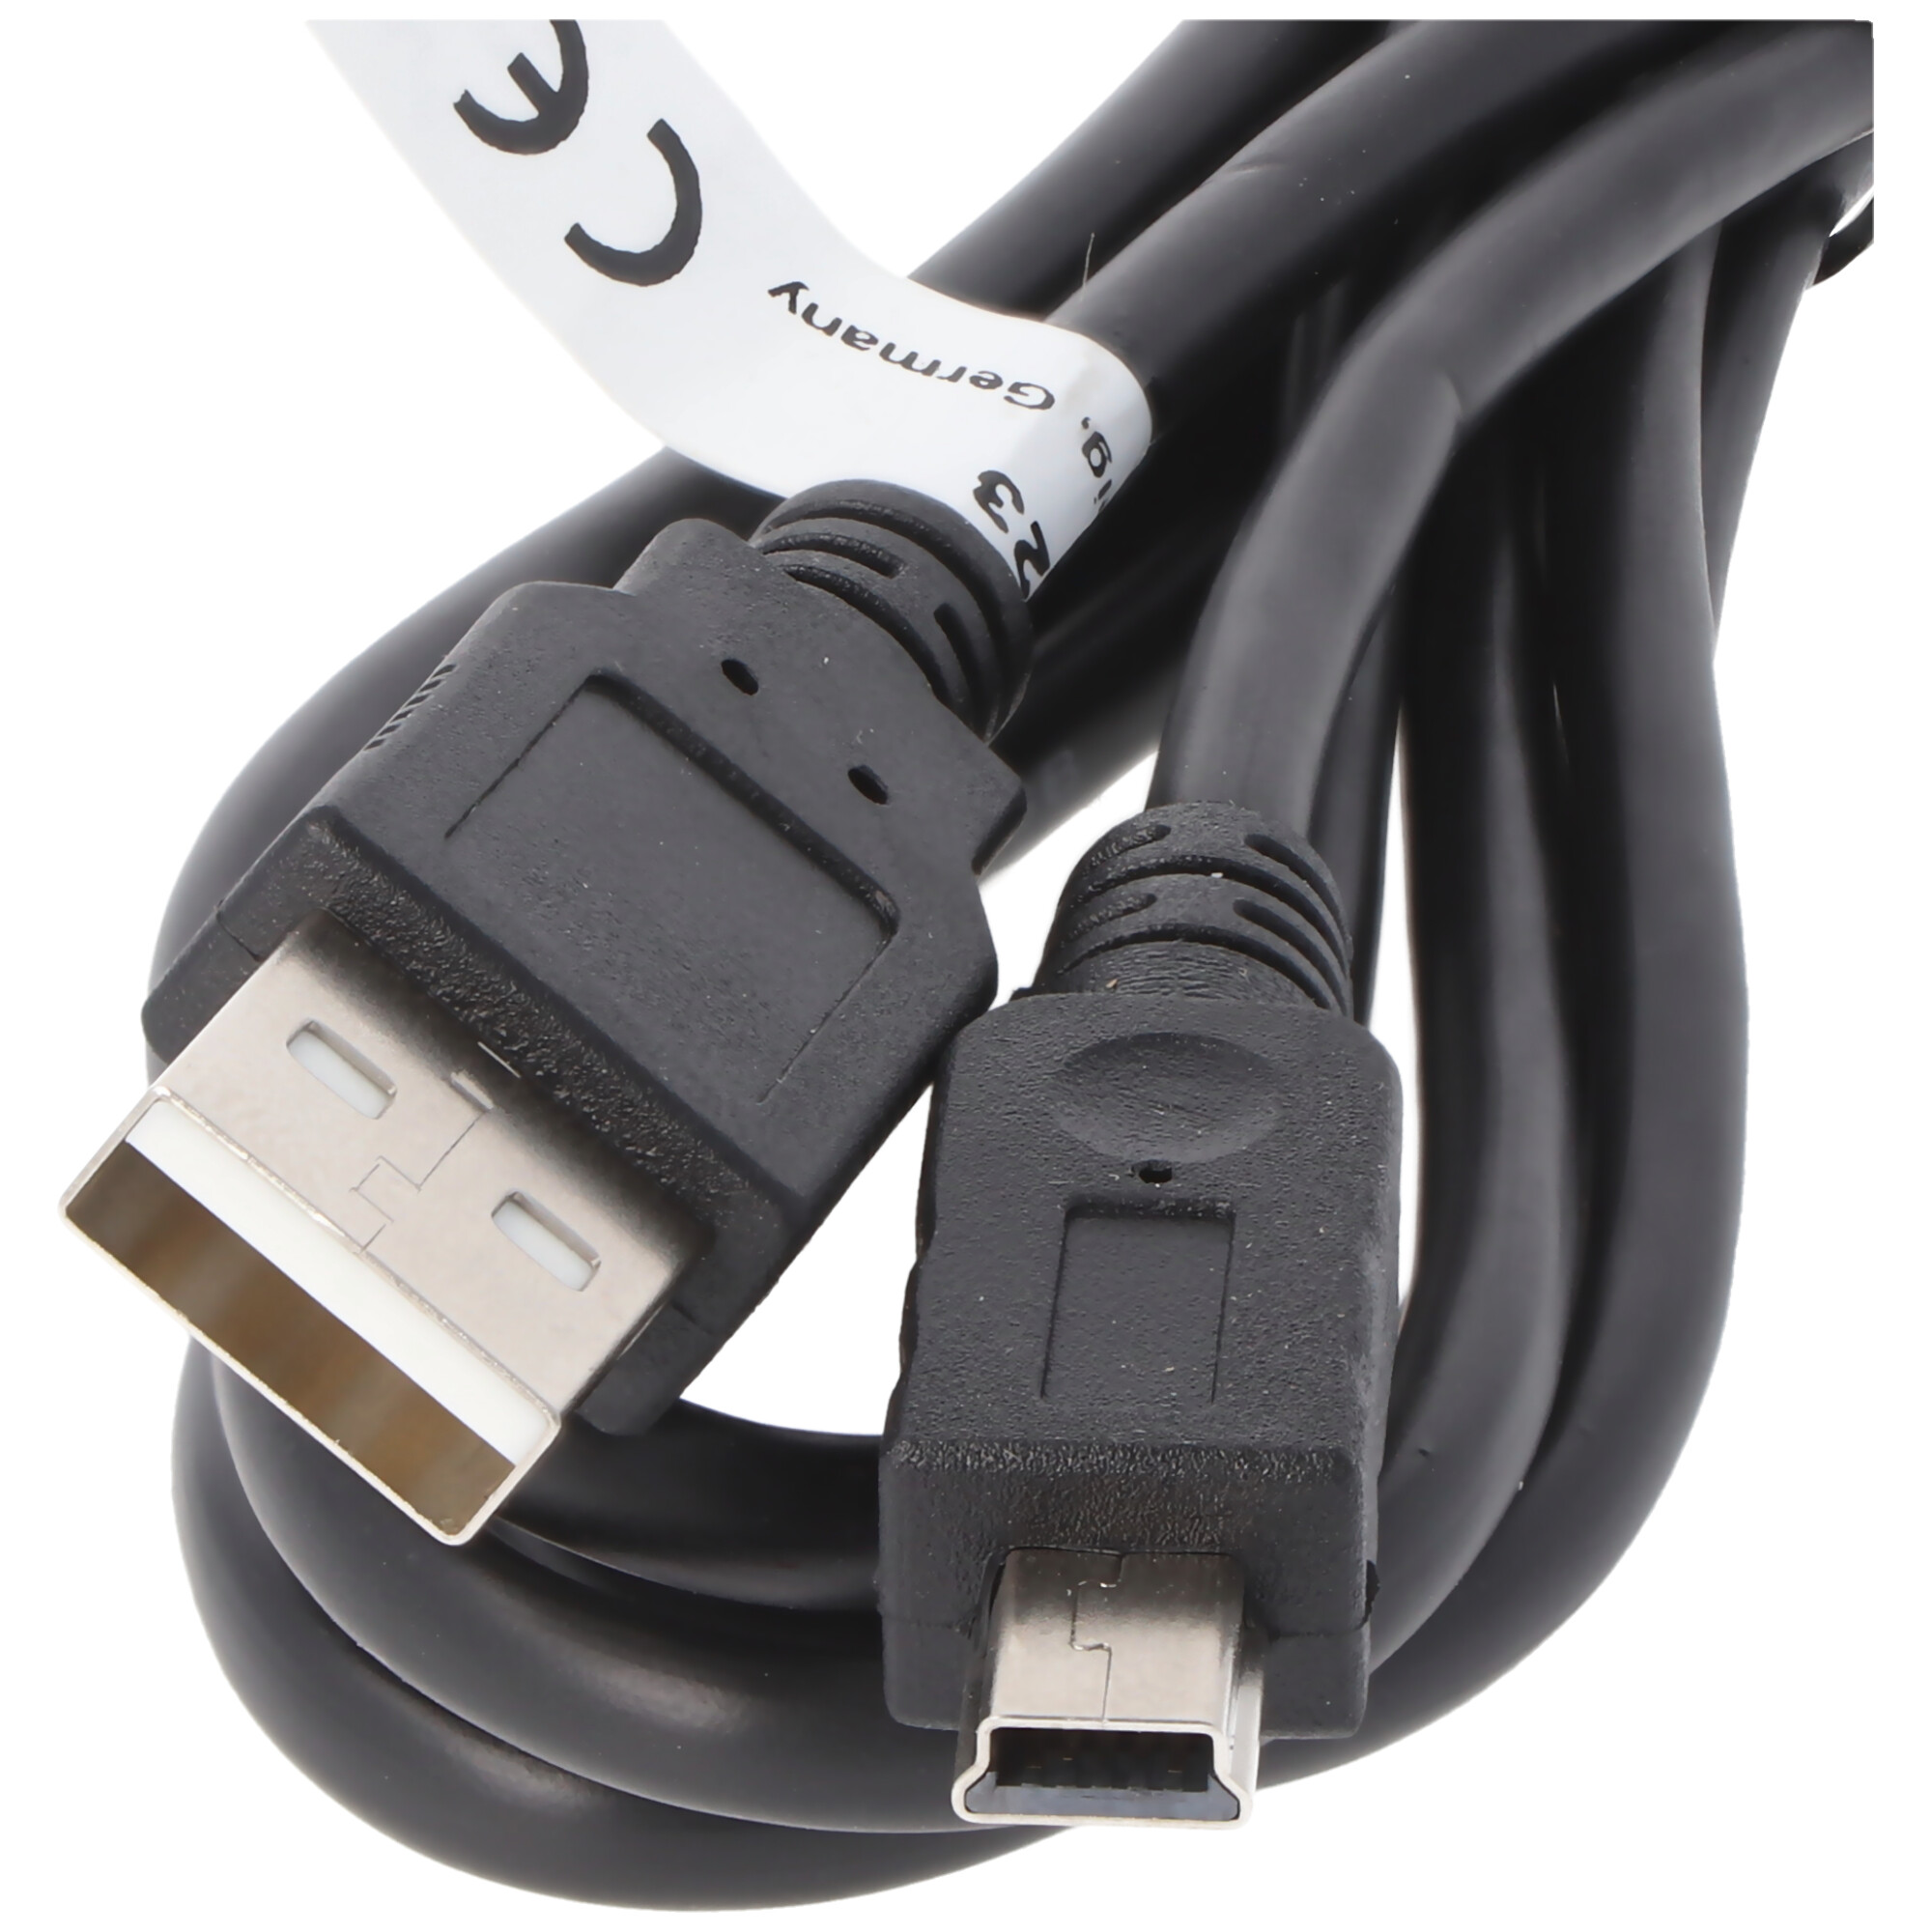 USB 2.0 Hi-Speed Kabel A Stecker auf B Mini-Stecker 5 polig